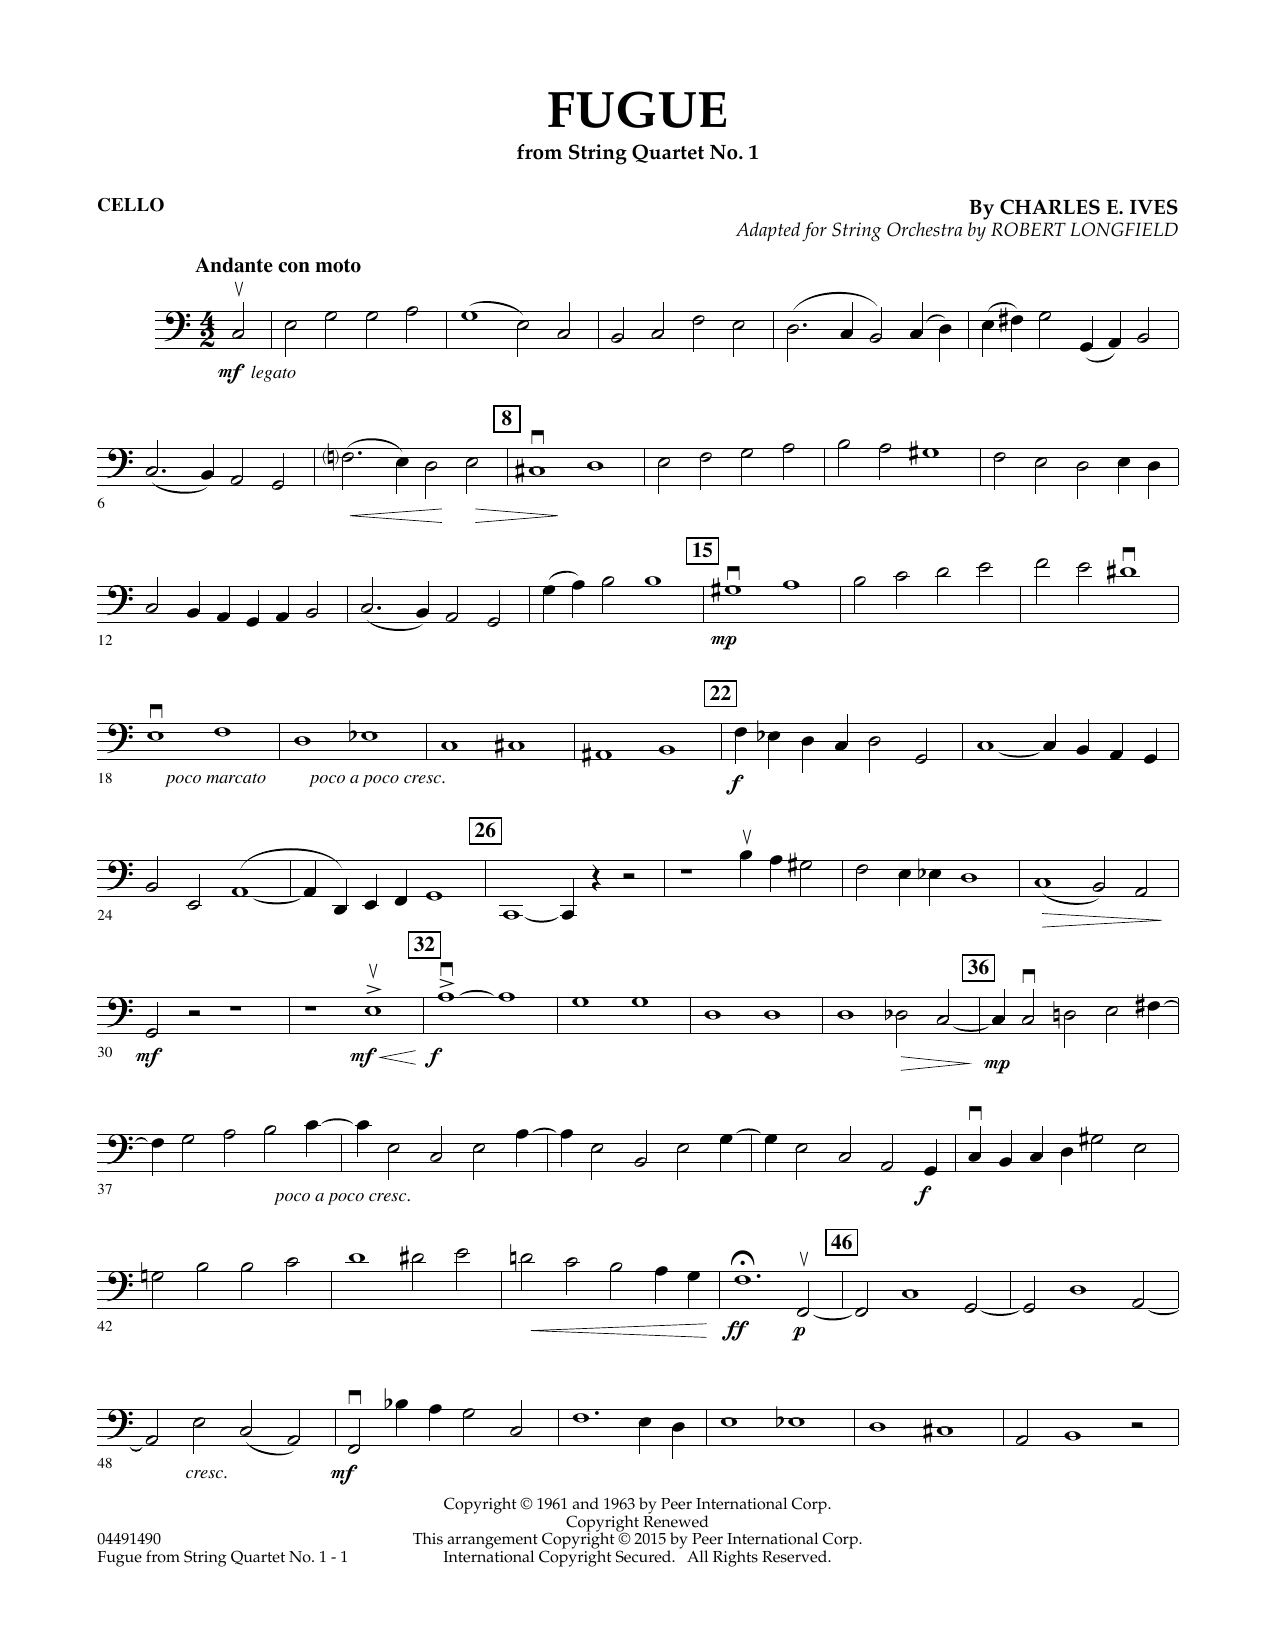 Download Robert Longfield Fugue from String Quartet No. 1 - Cello Sheet Music